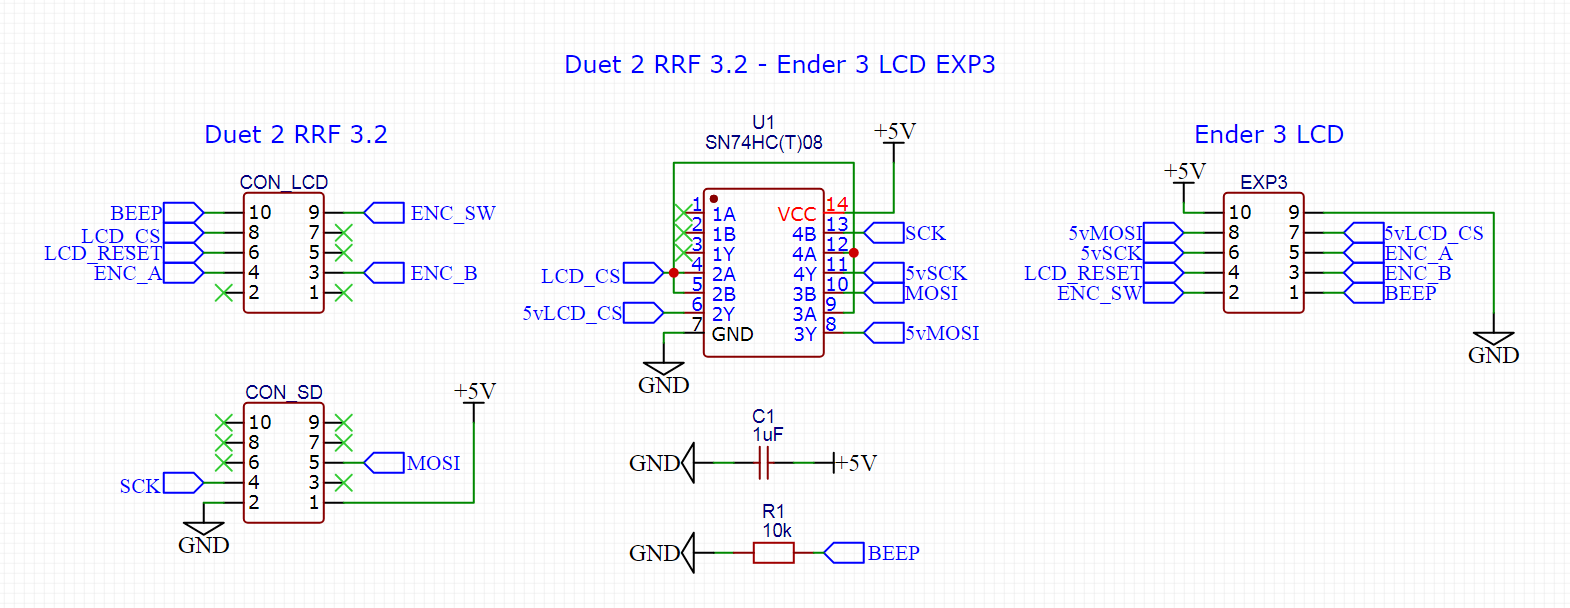 Duet2 RRF 3.2 - Ender 3 LCD EXP3.png